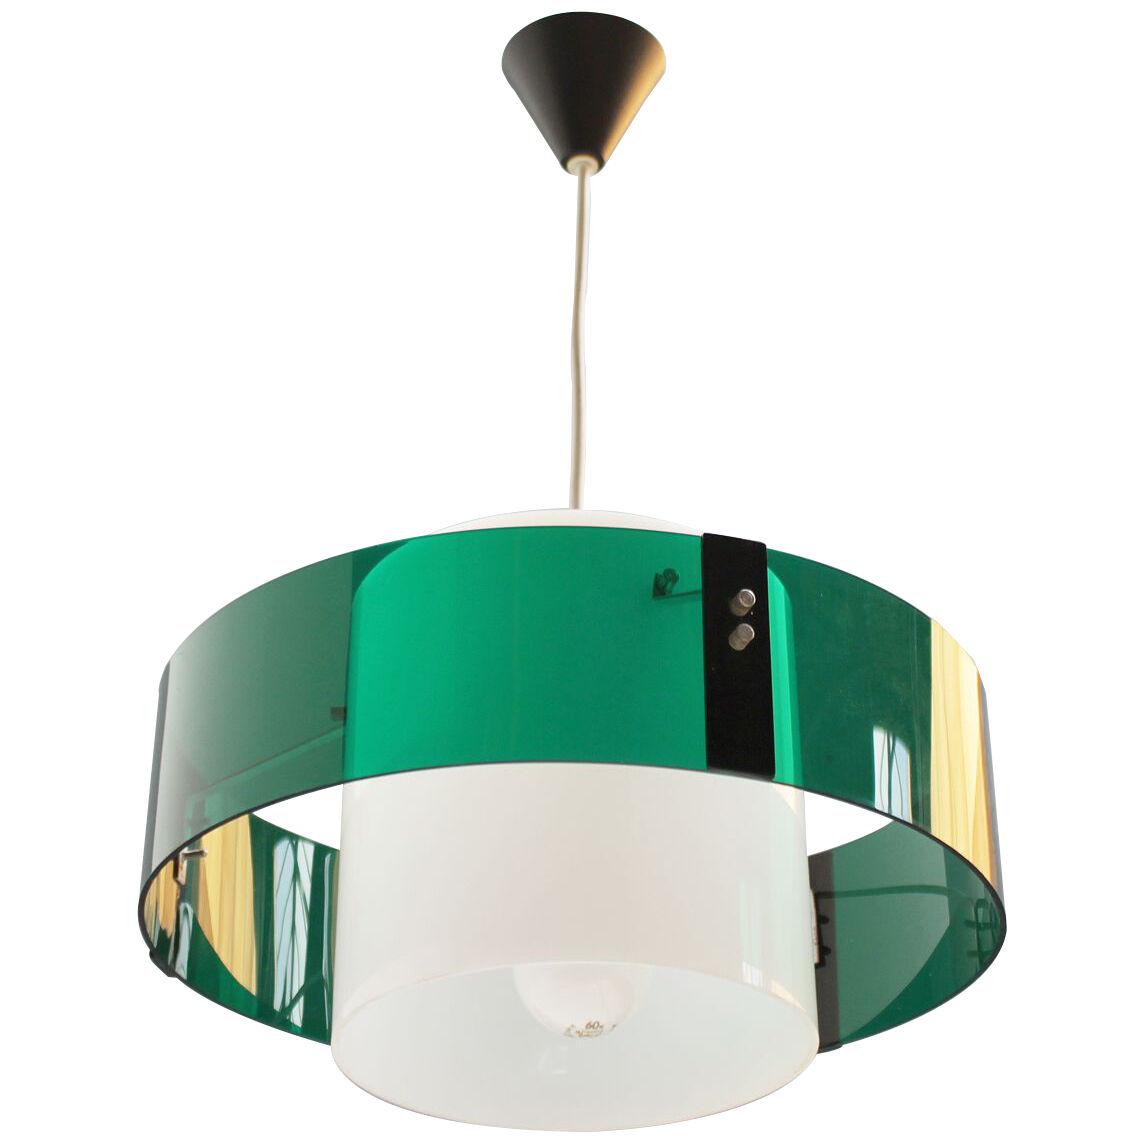 Modernist French Pendant Lamp